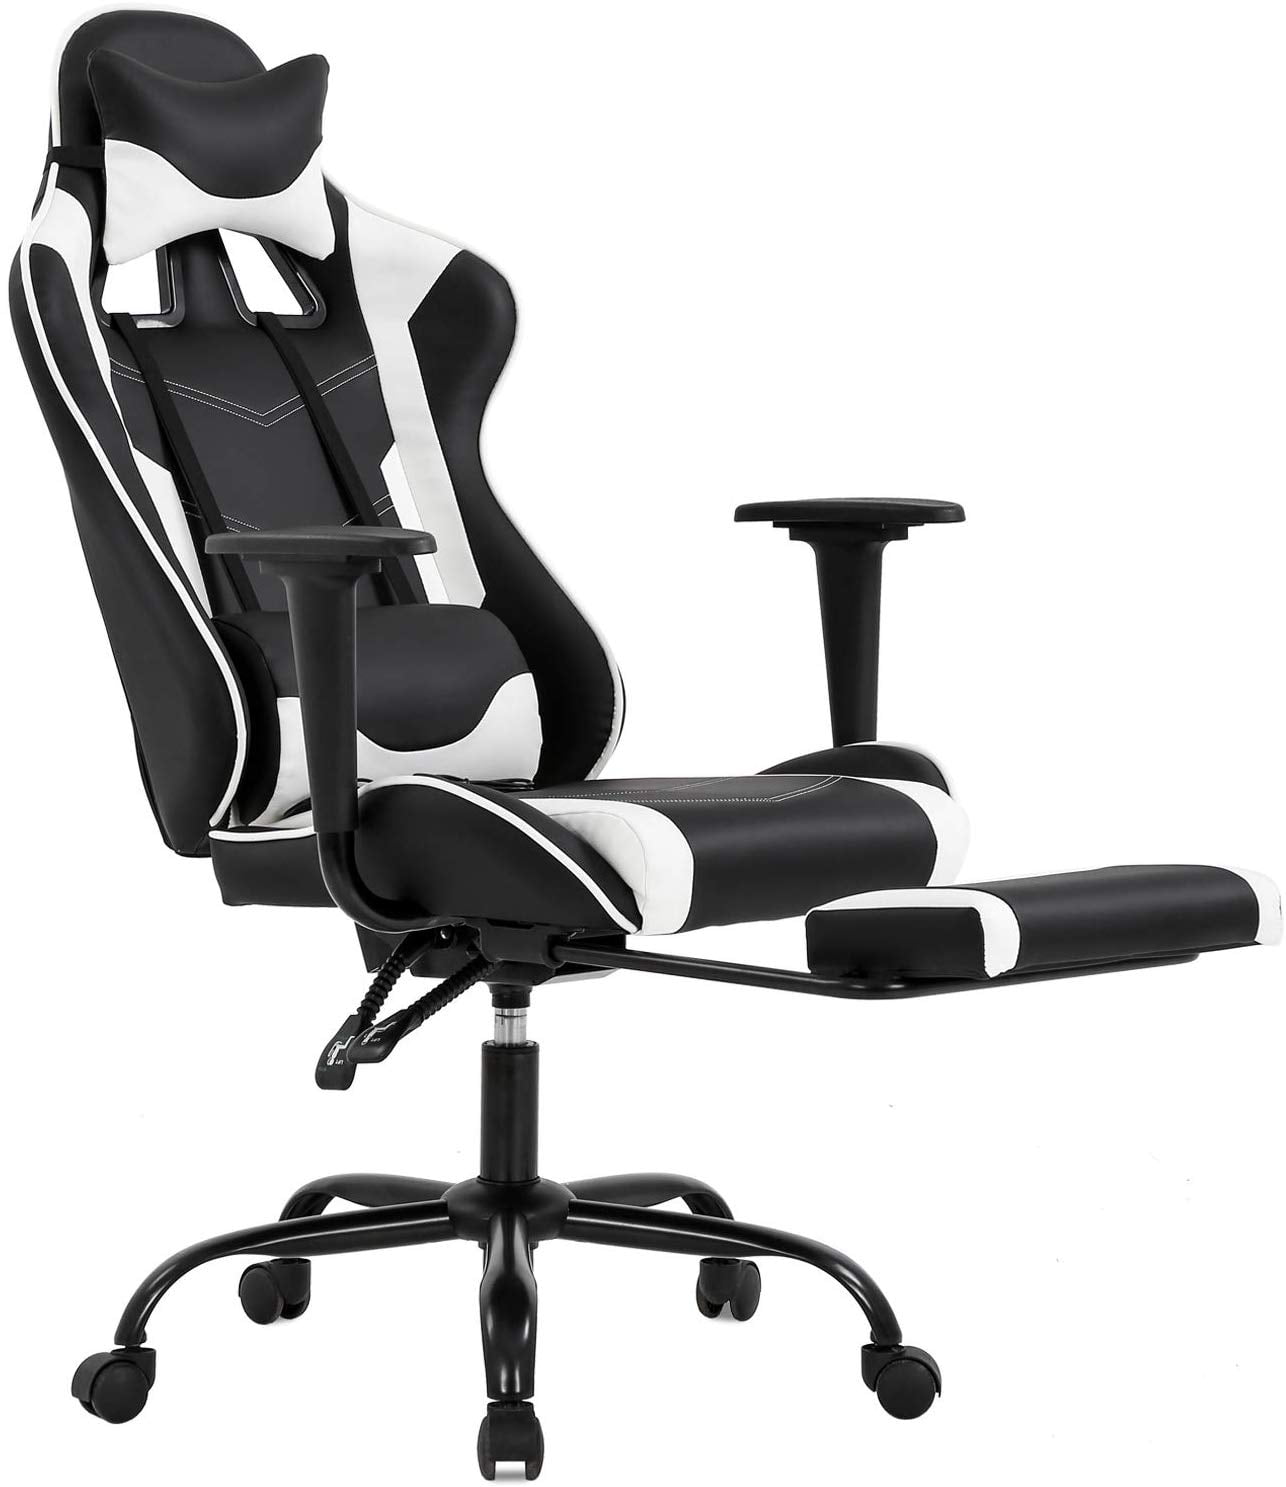 Ergonomic Gaming Chair PU Leather Office Executive Computer Desk Seat Swivel USA 